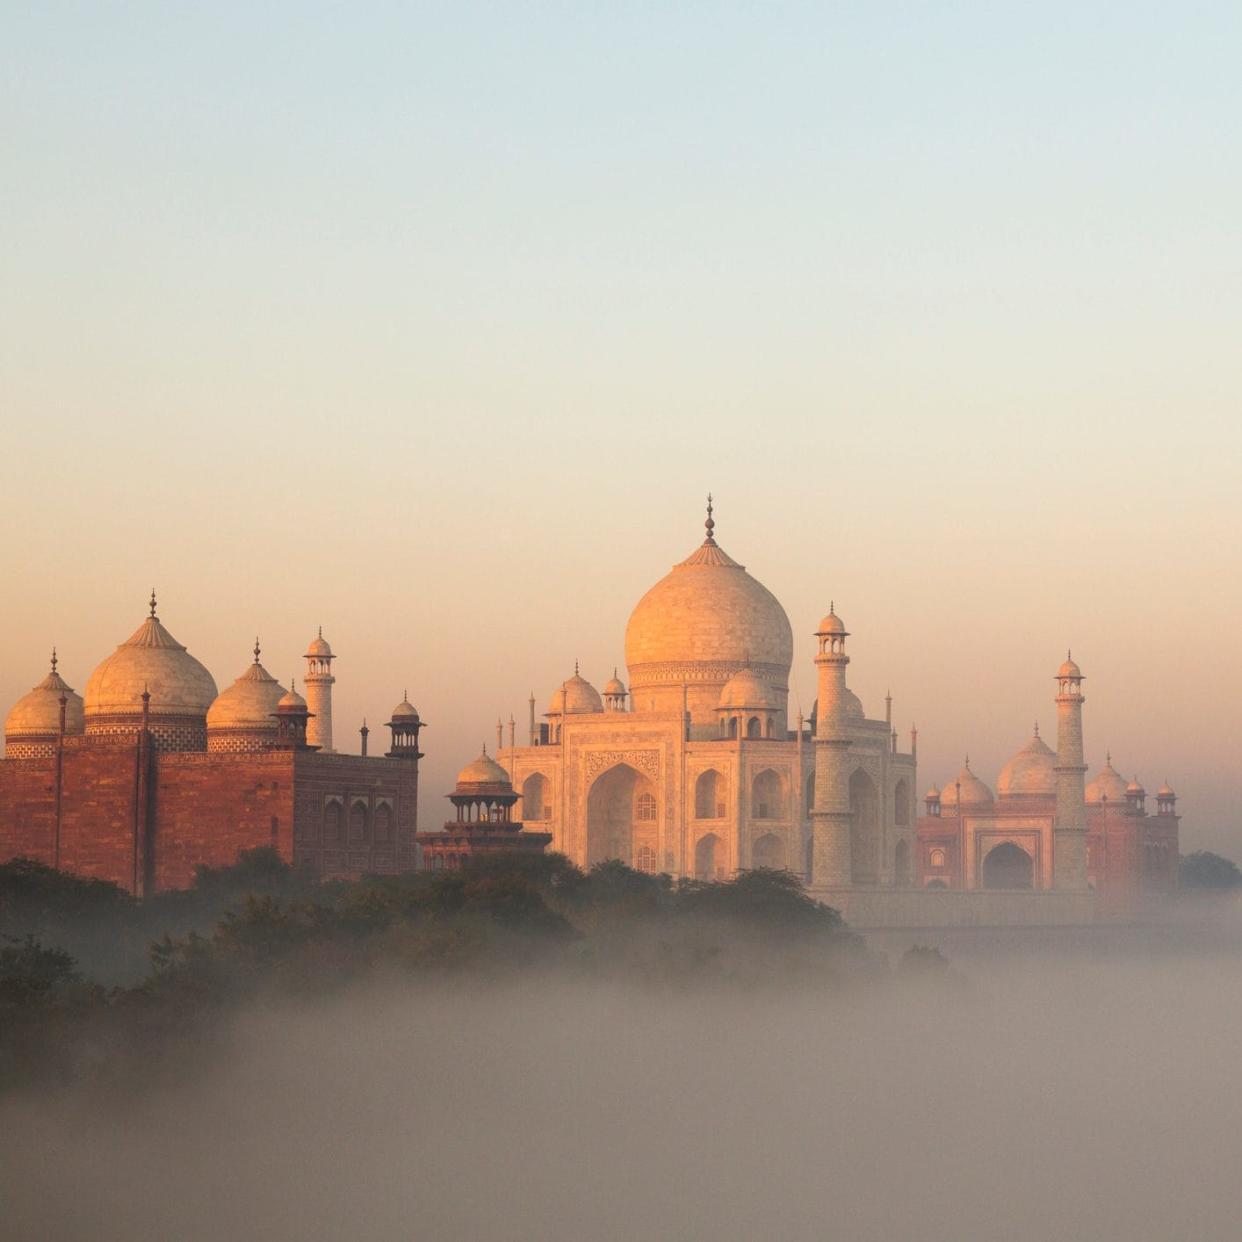 Early morning fog envelopes the Taj Mahal - Adrian Pope